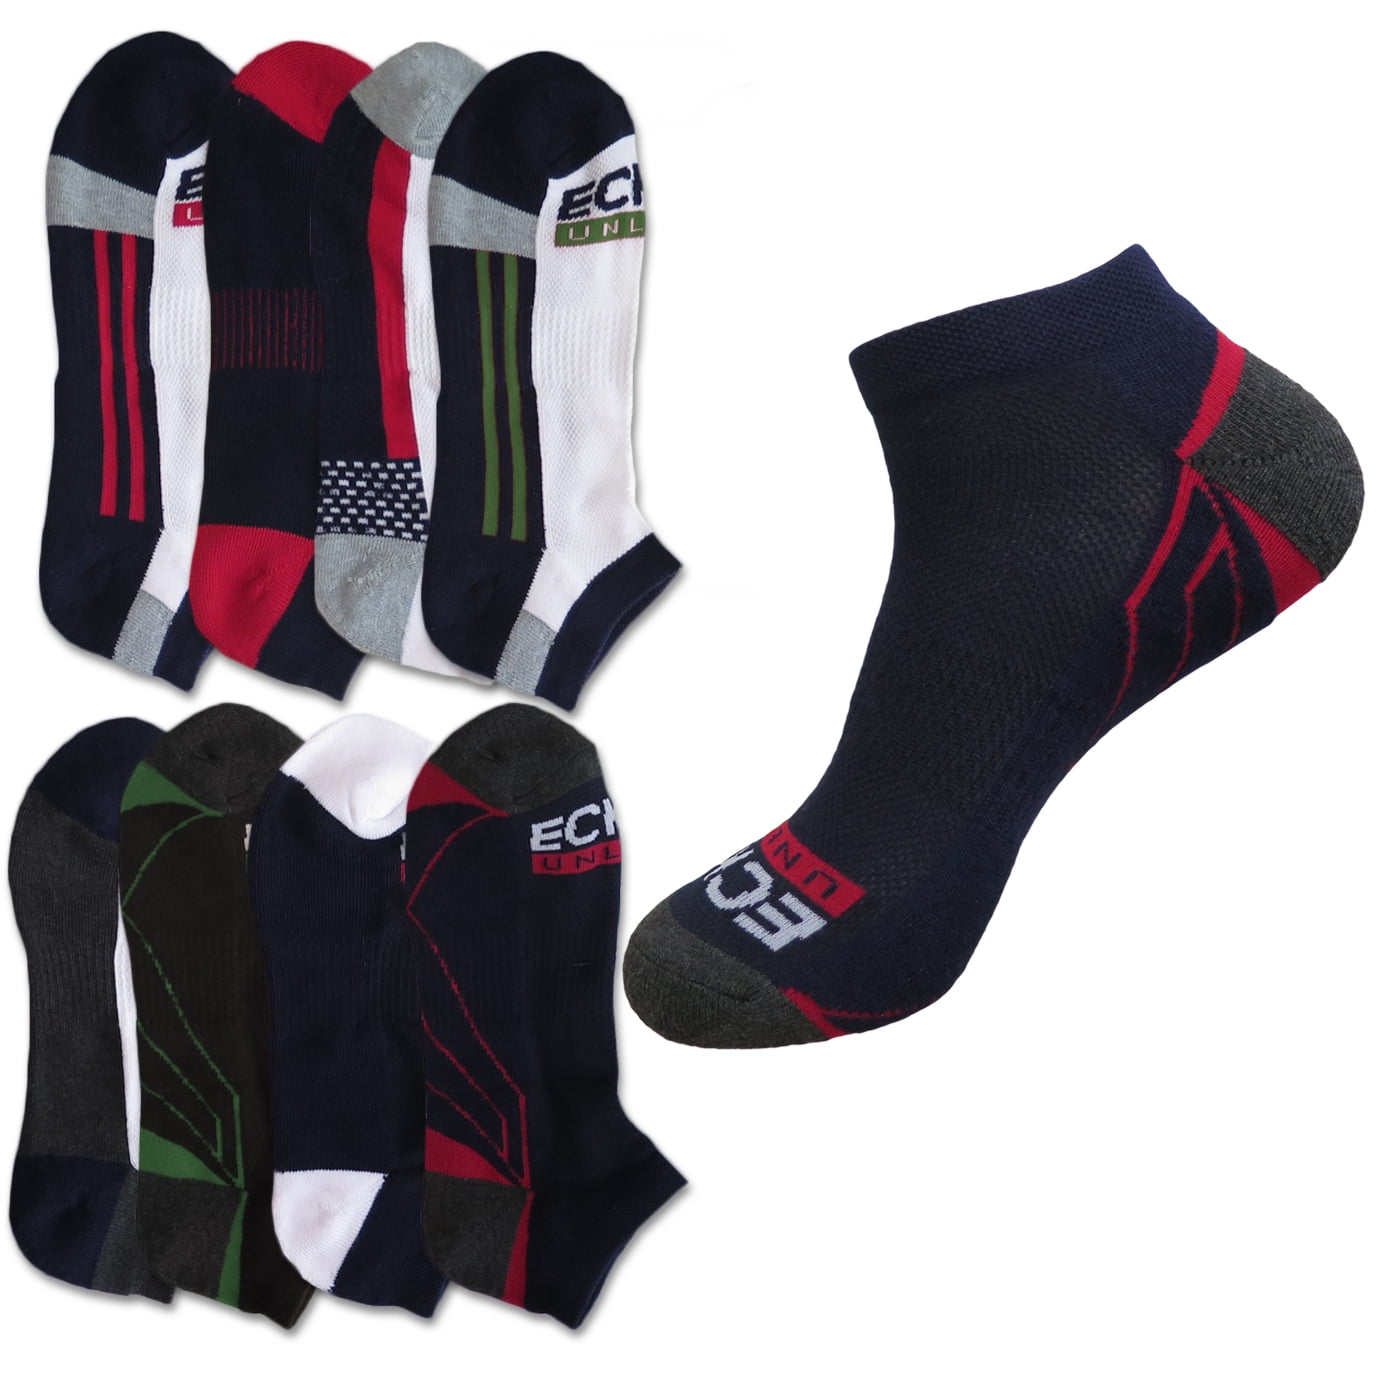 Men's Calf-High Crew Socks Choose Color & Size 10-13 Ecko Untld 